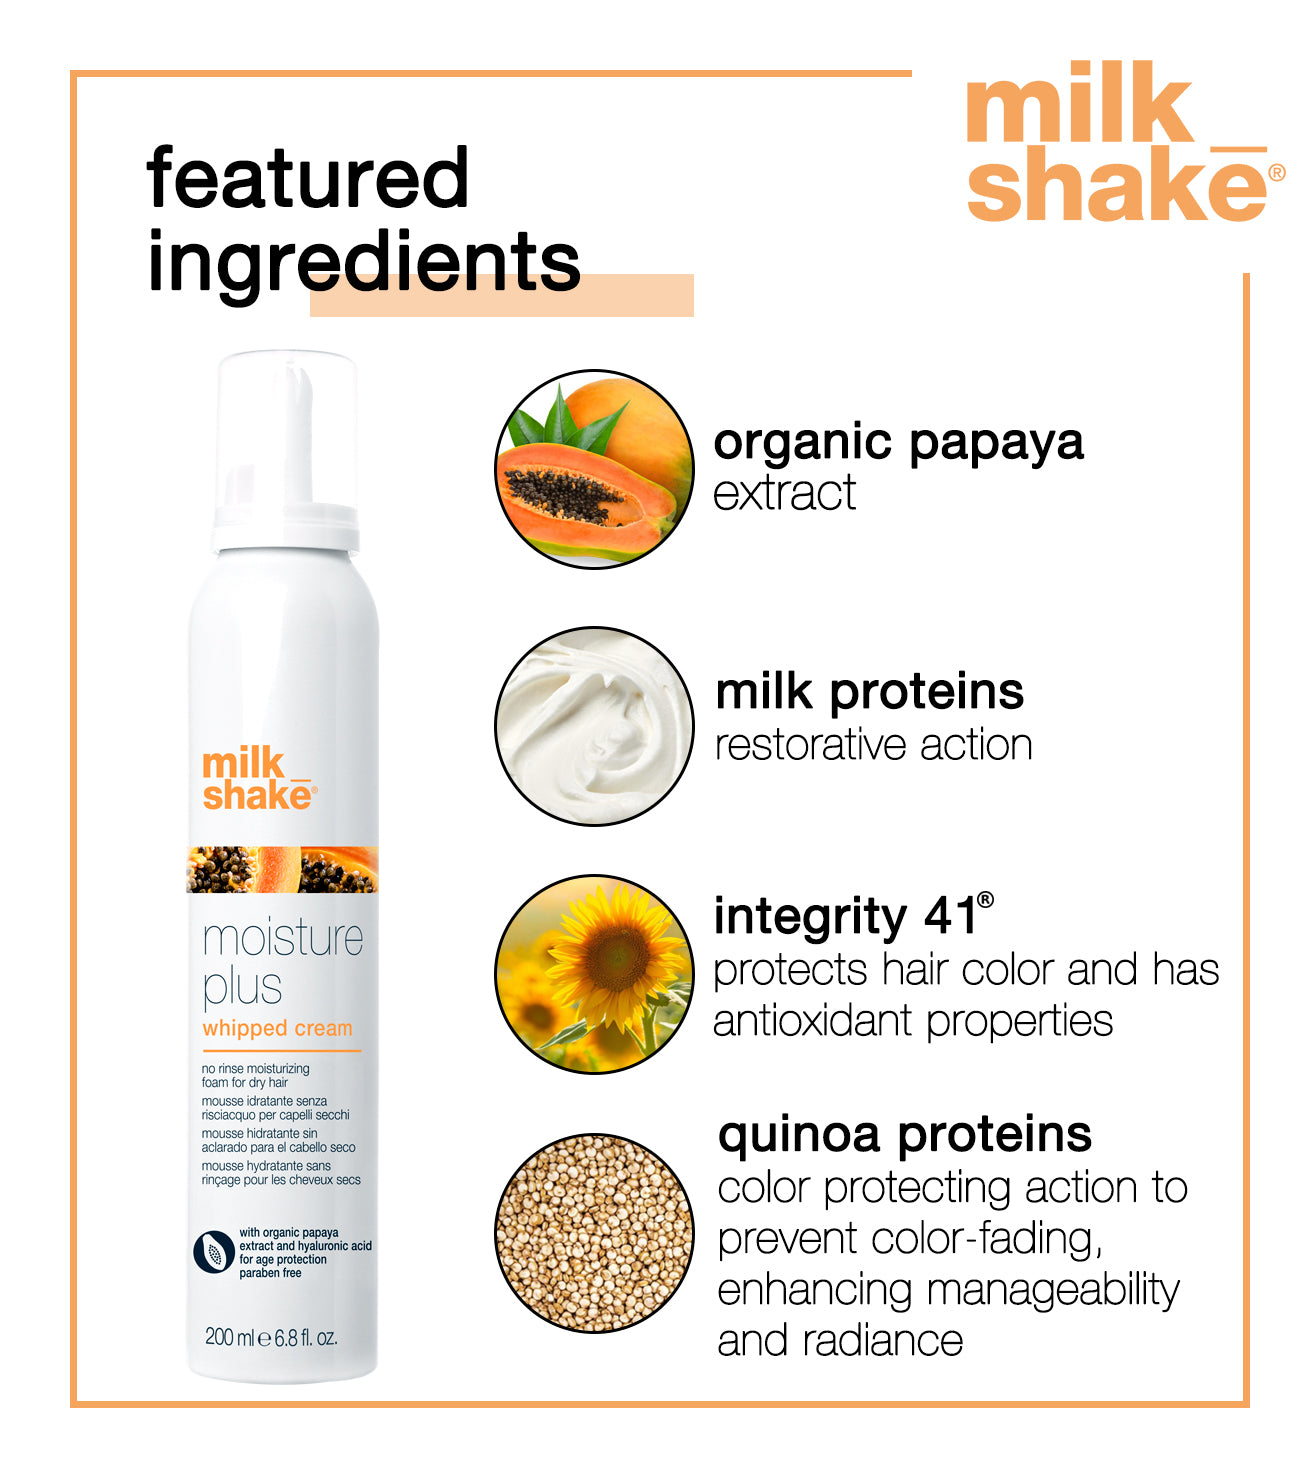 milk_shake moisture plus whipped cream